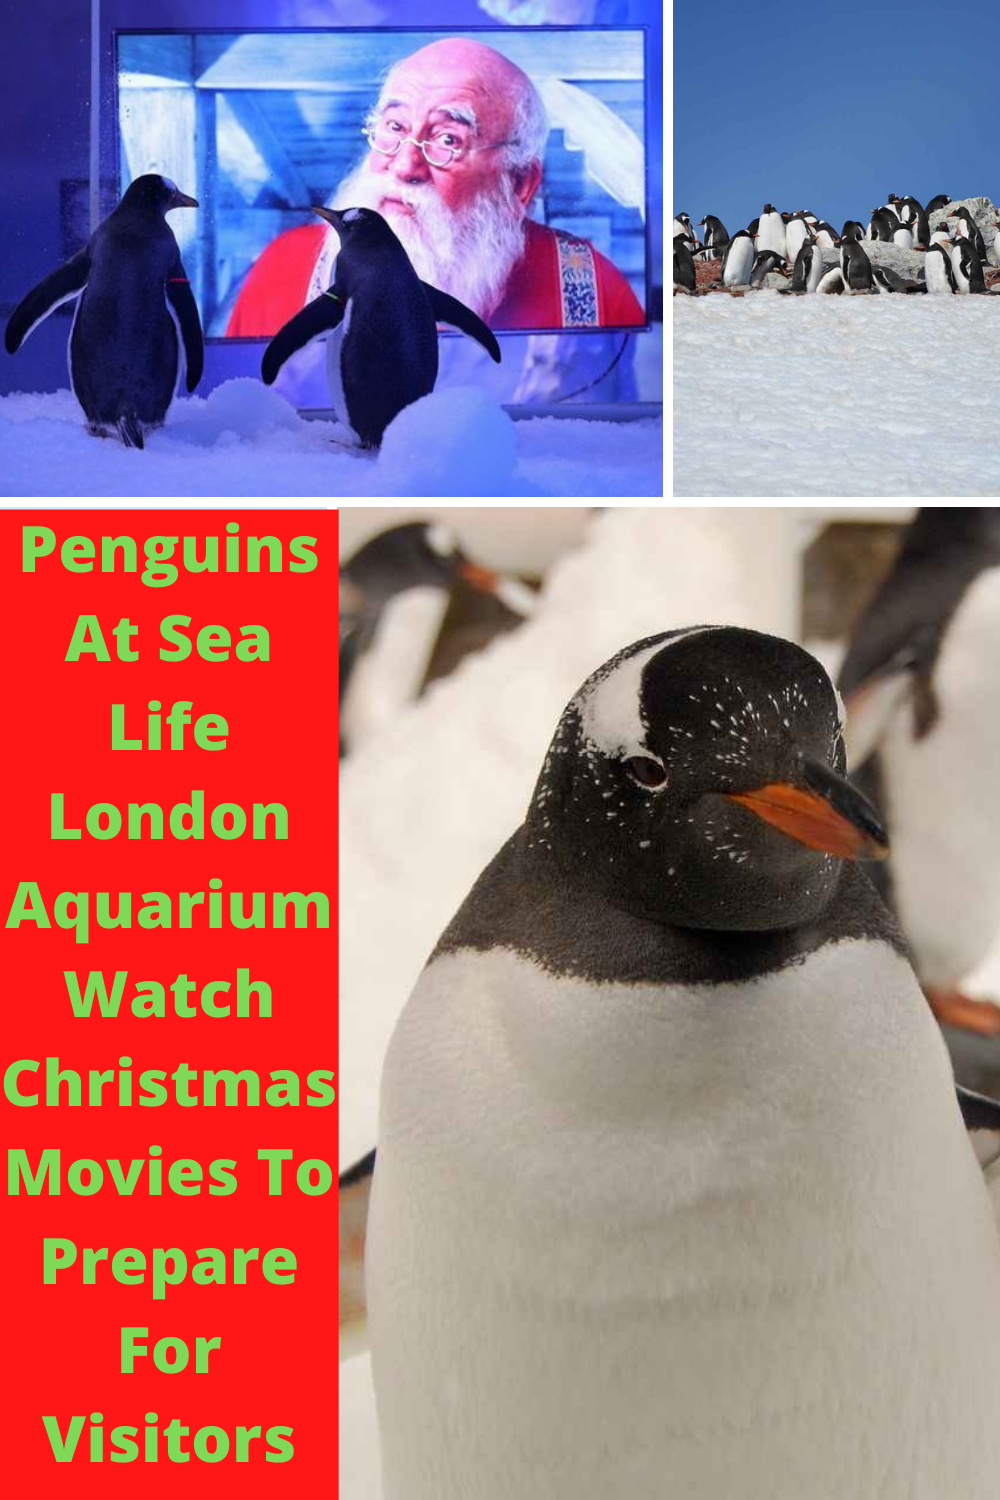 Penguins At Sea Life London Aquarium Watch Christmas Movies To Prepare For Visitors